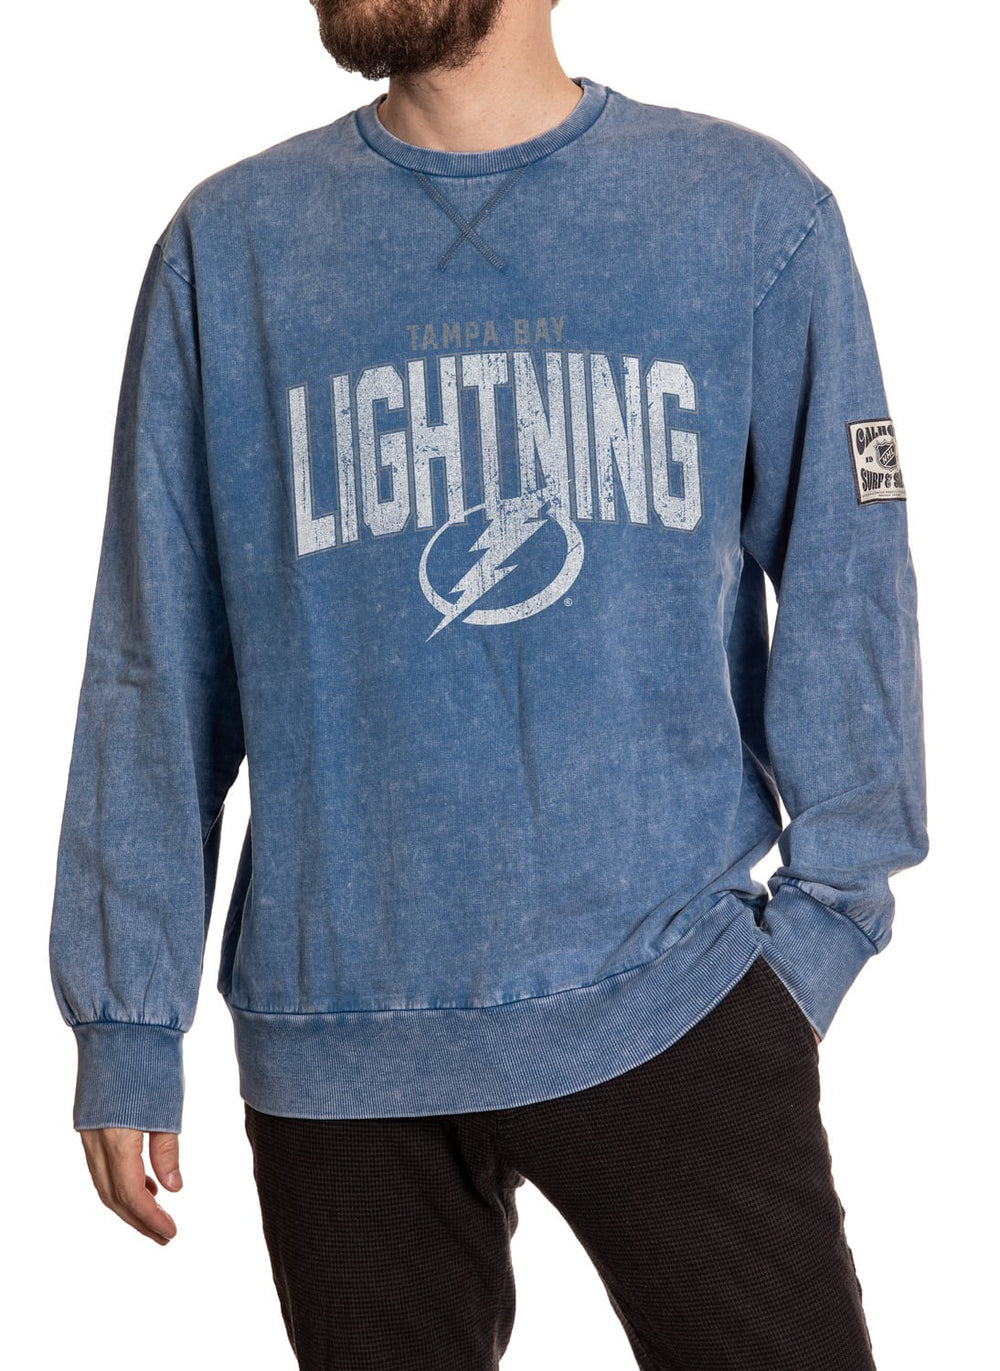 Tampa Bay Lightning Strike Back 2023 Playoff Shirt, hoodie, sweater, long  sleeve and tank top